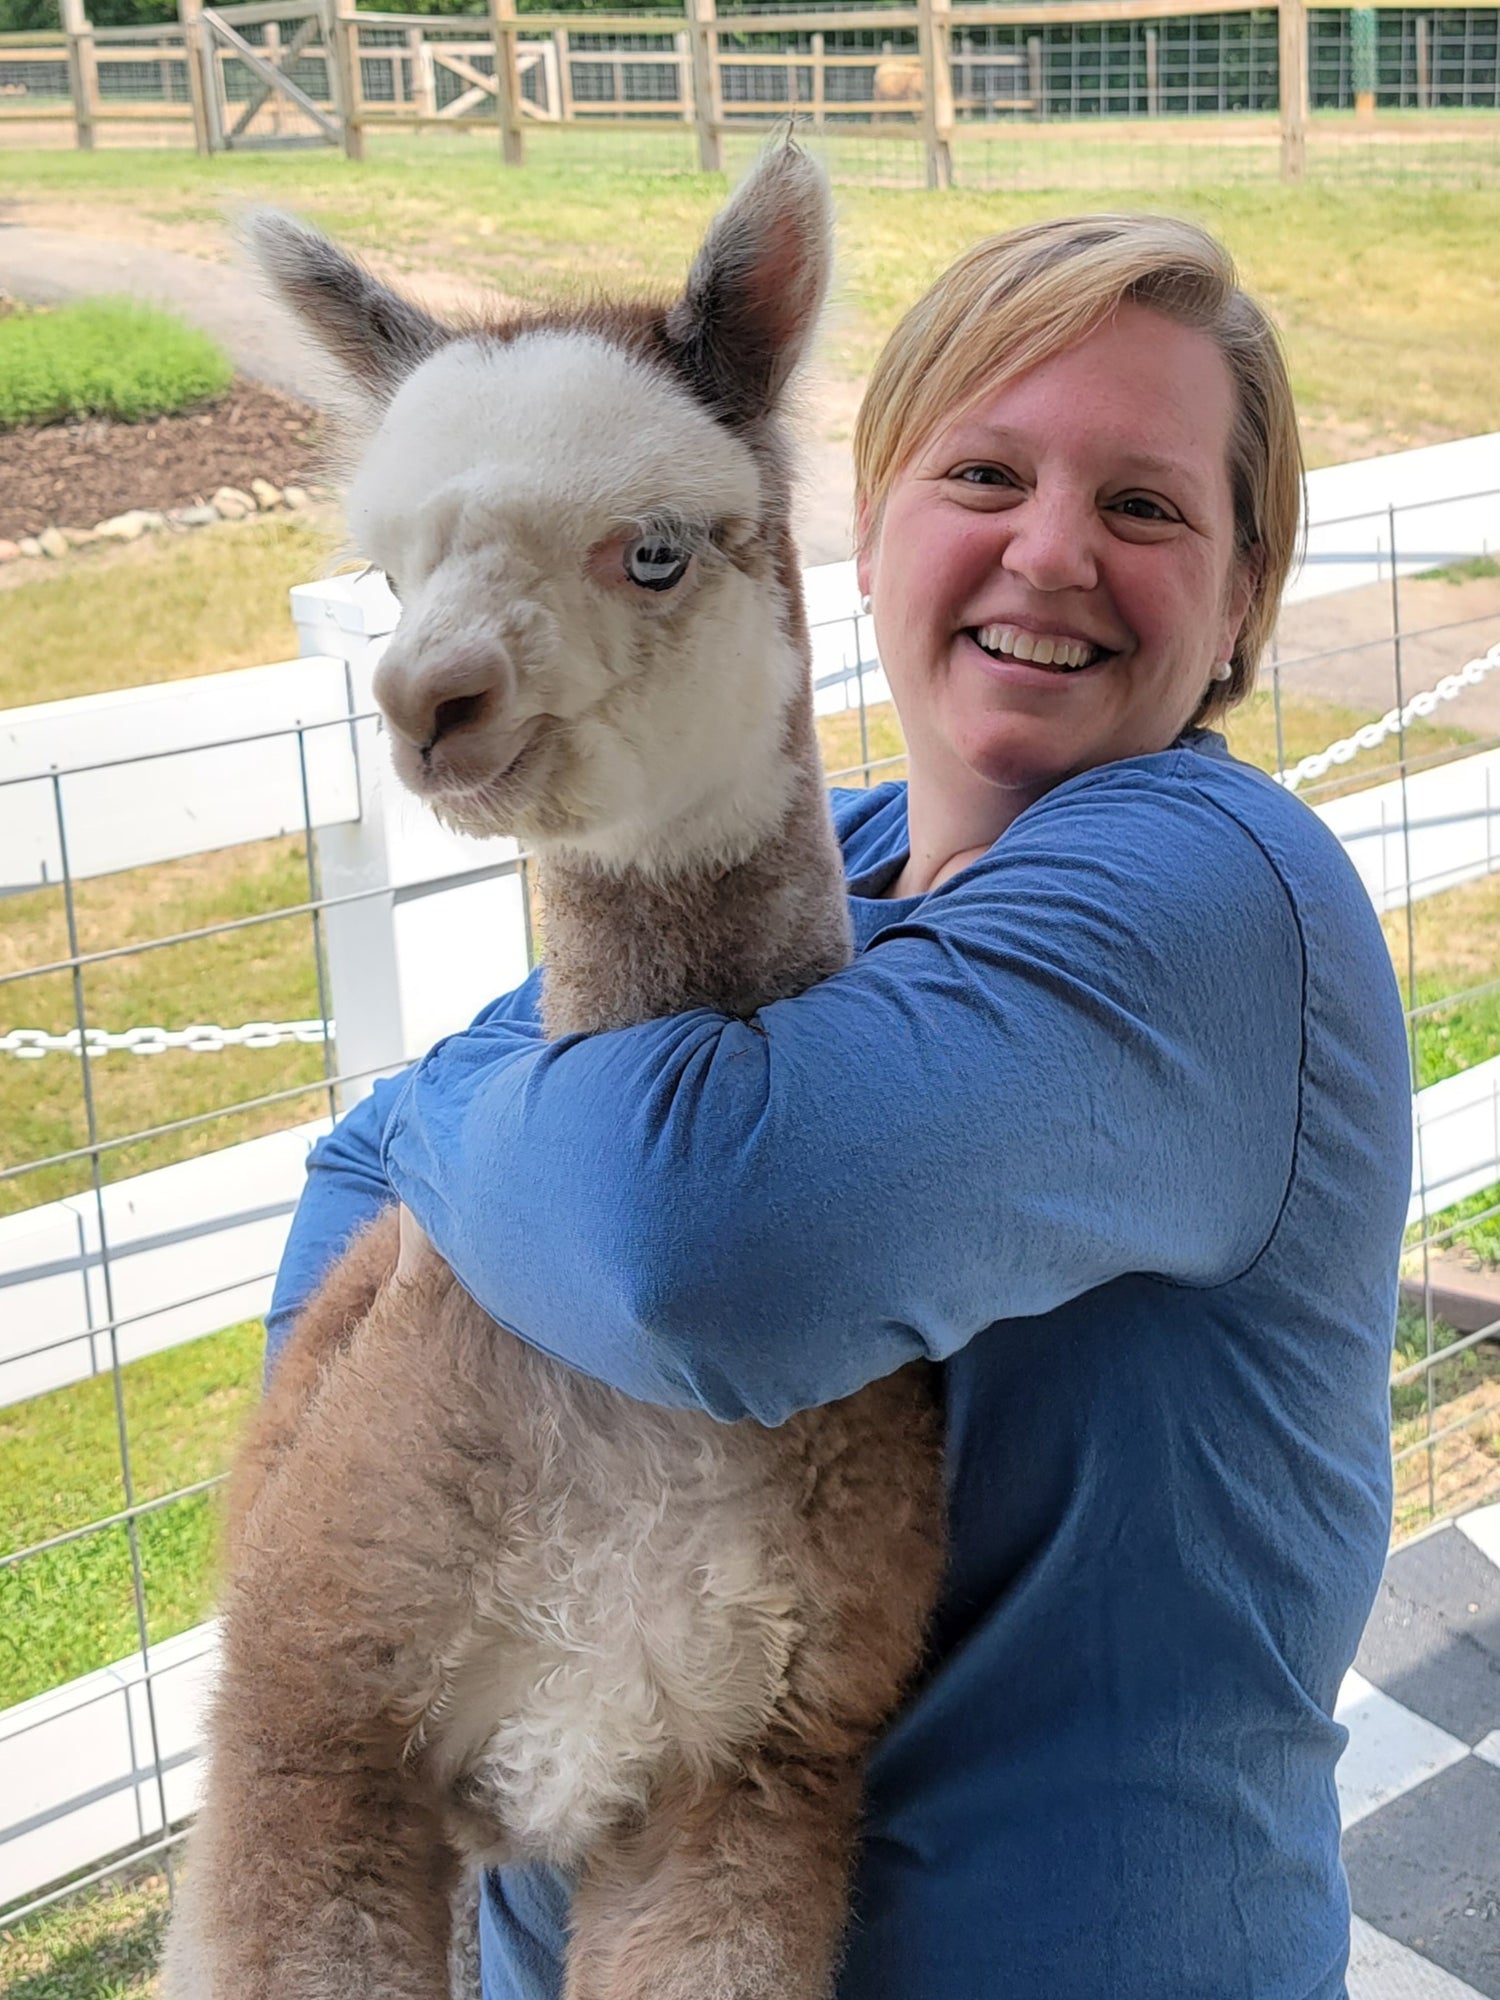 Lady hugging alpaca